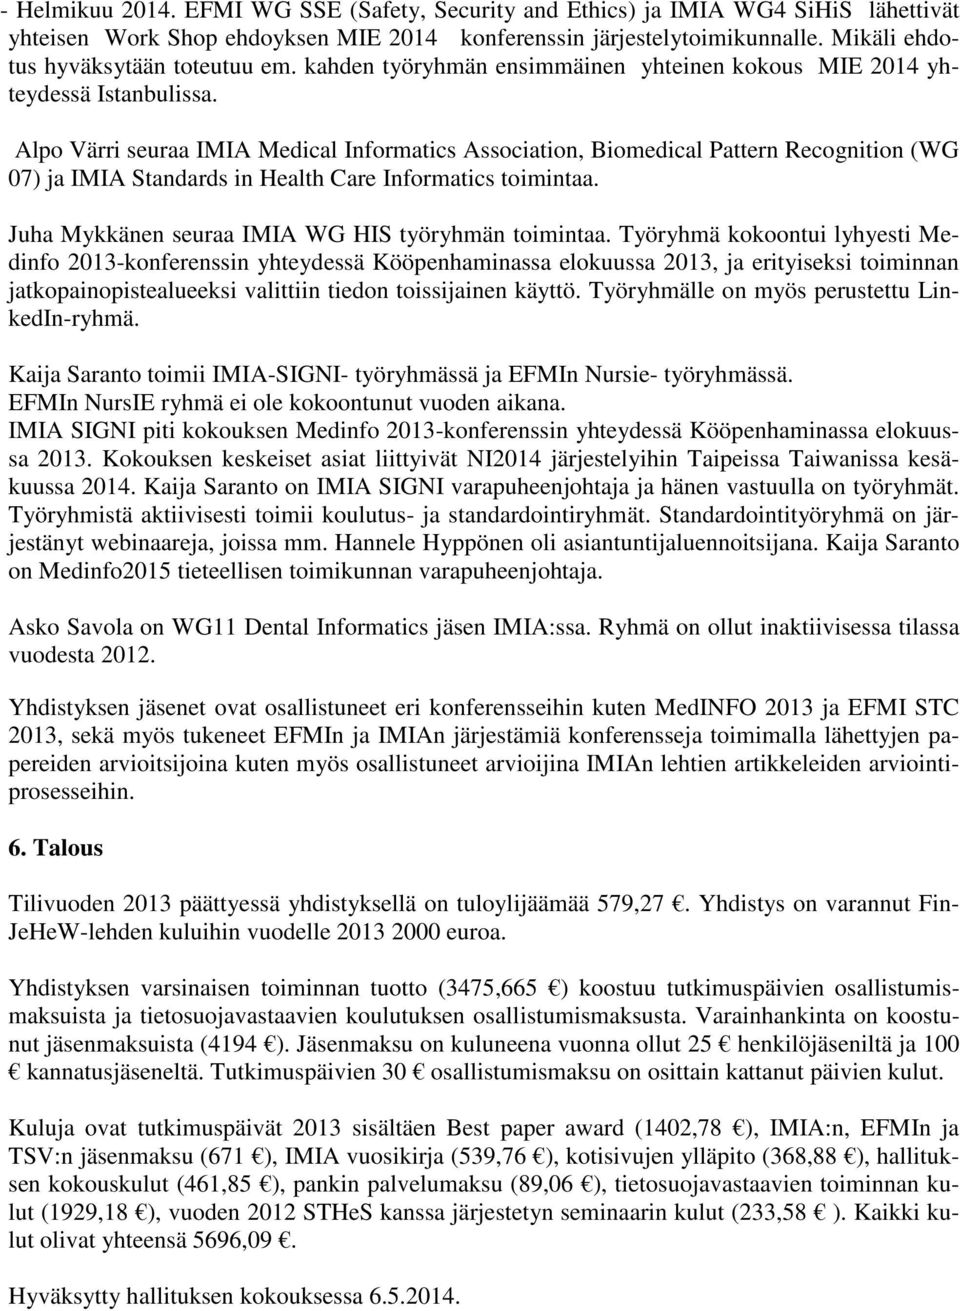 Alpo Värri seuraa IMIA Medical Informatics Association, Biomedical Pattern Recognition (WG 07) ja IMIA Standards in Health Care Informatics toimintaa.